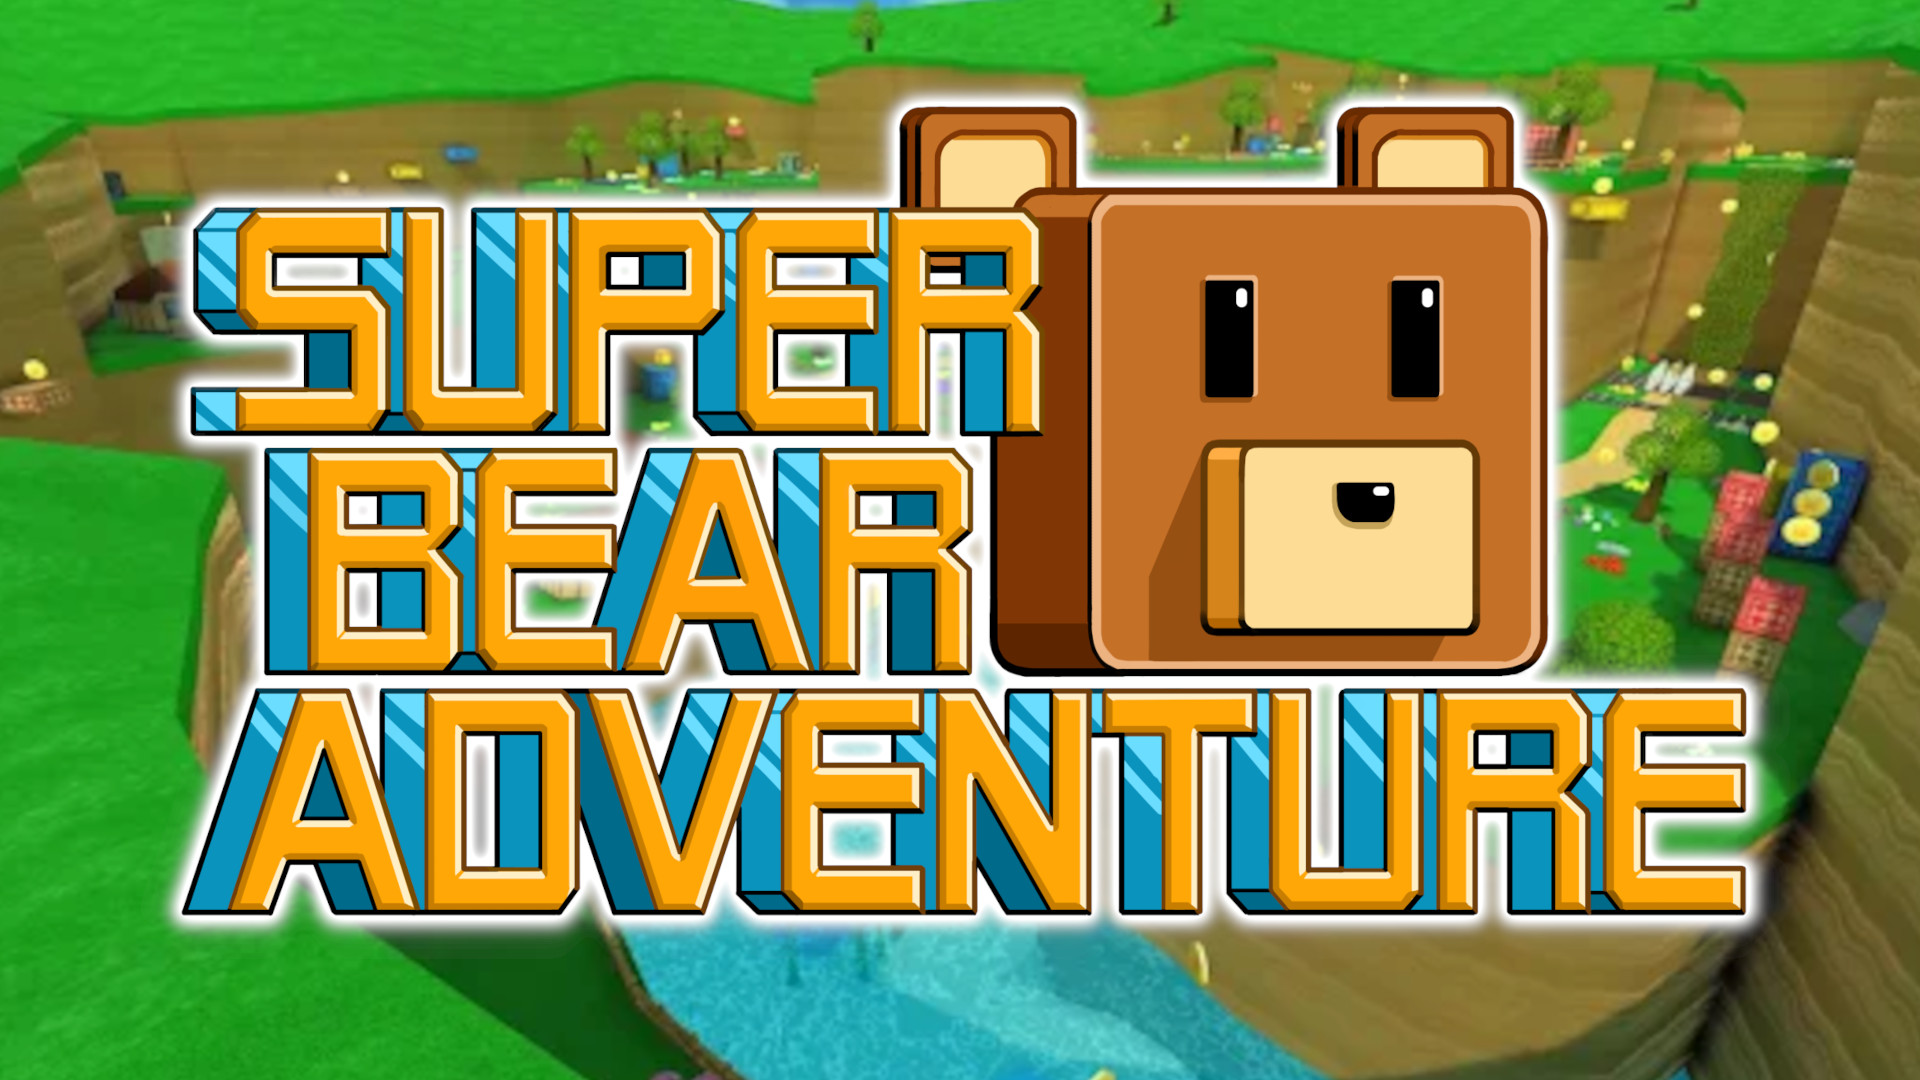 BEAR SUPER BEAR ADVENTURE